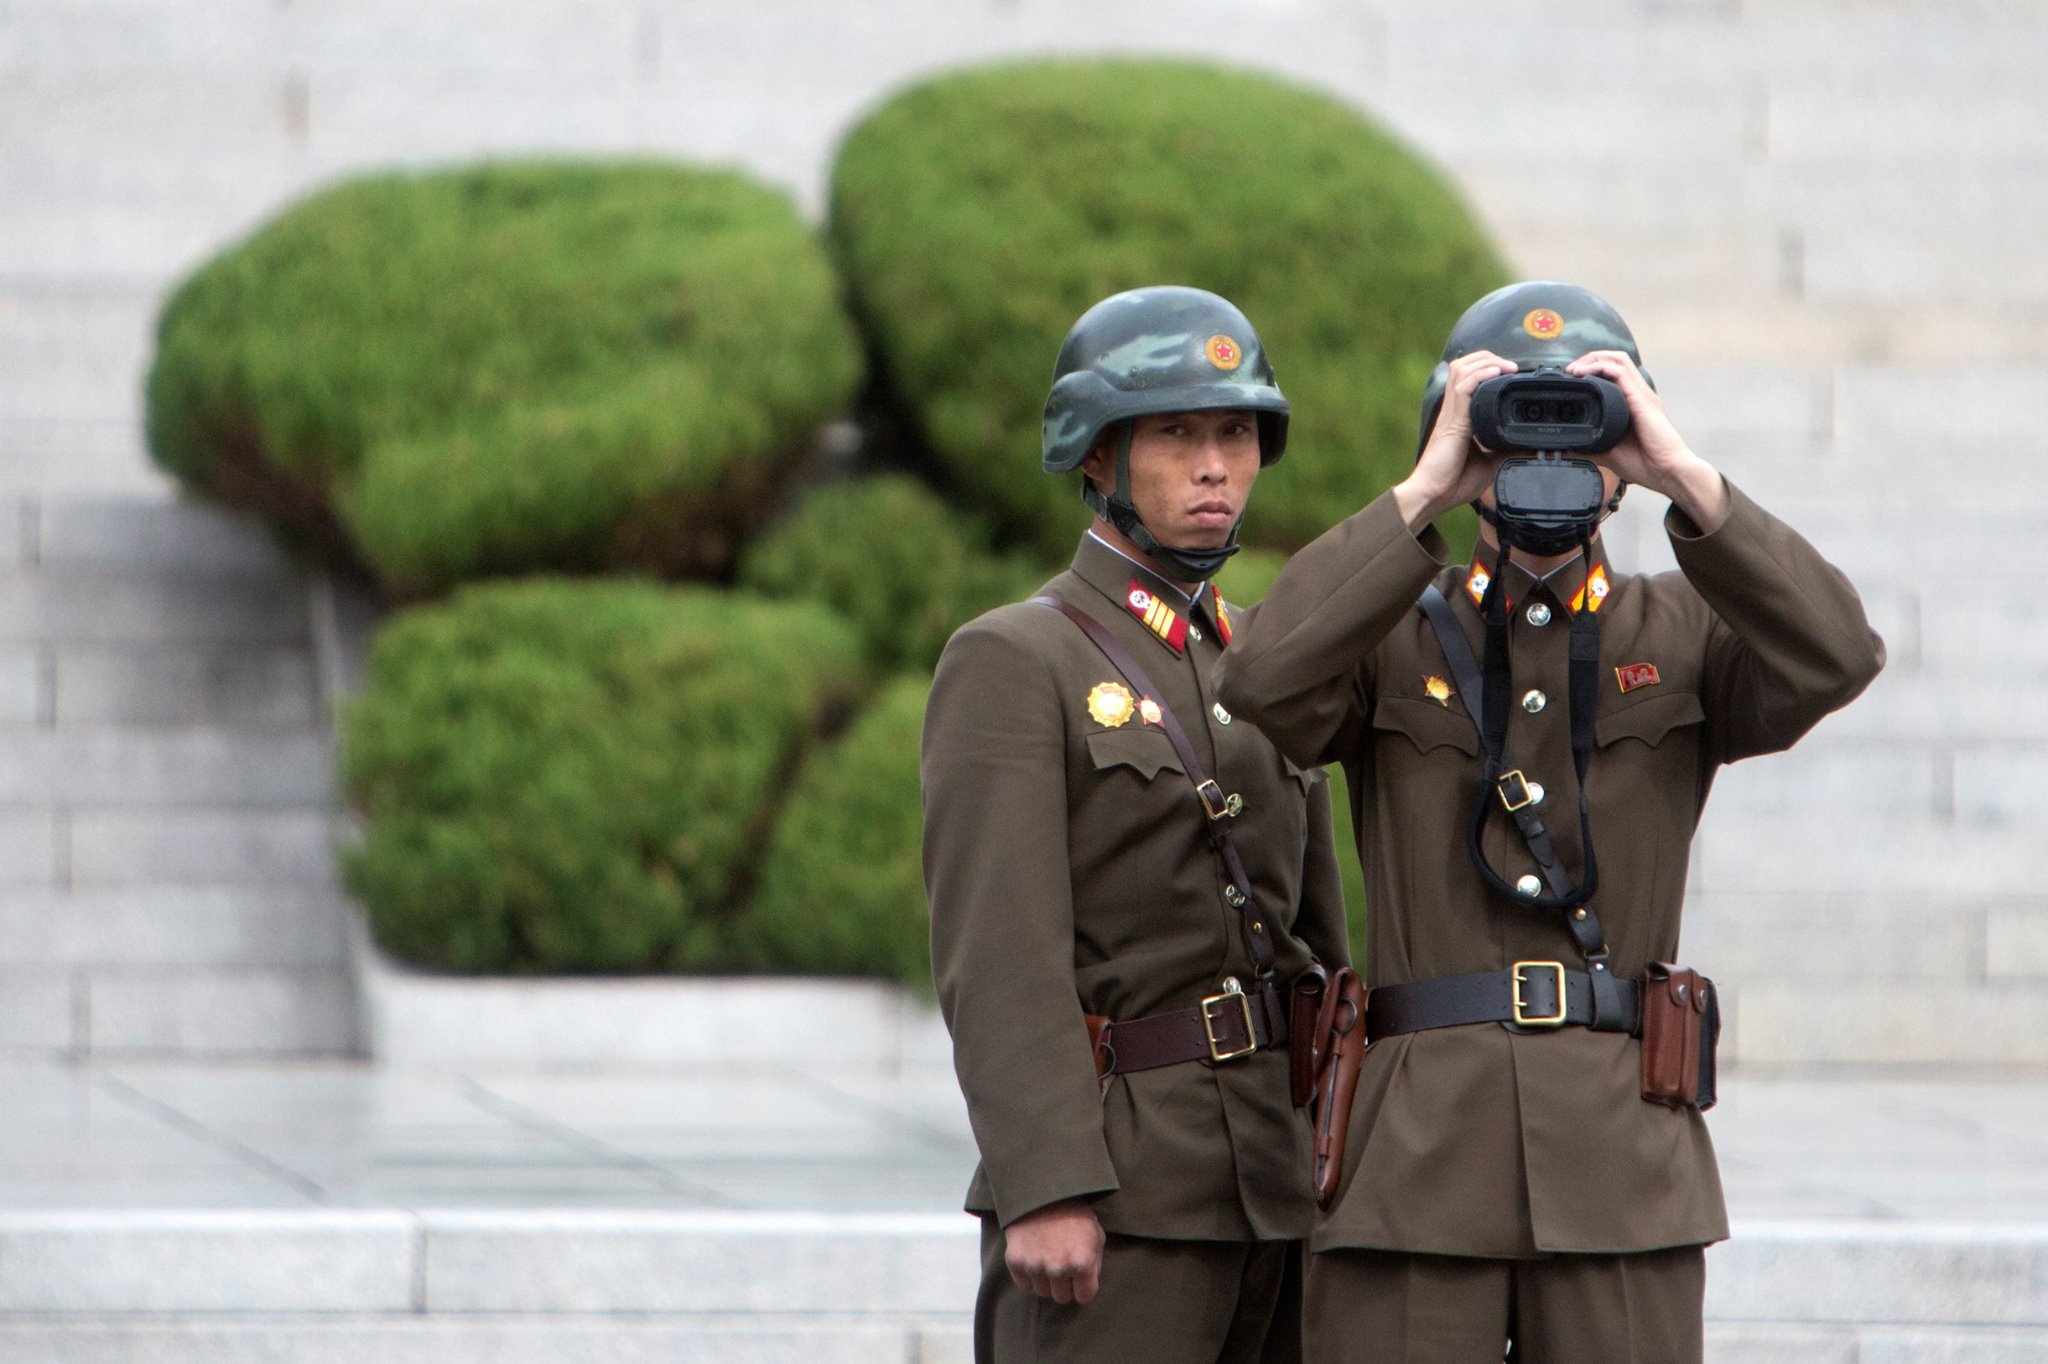 North Korean soldier has fled to South Korea through DMZ